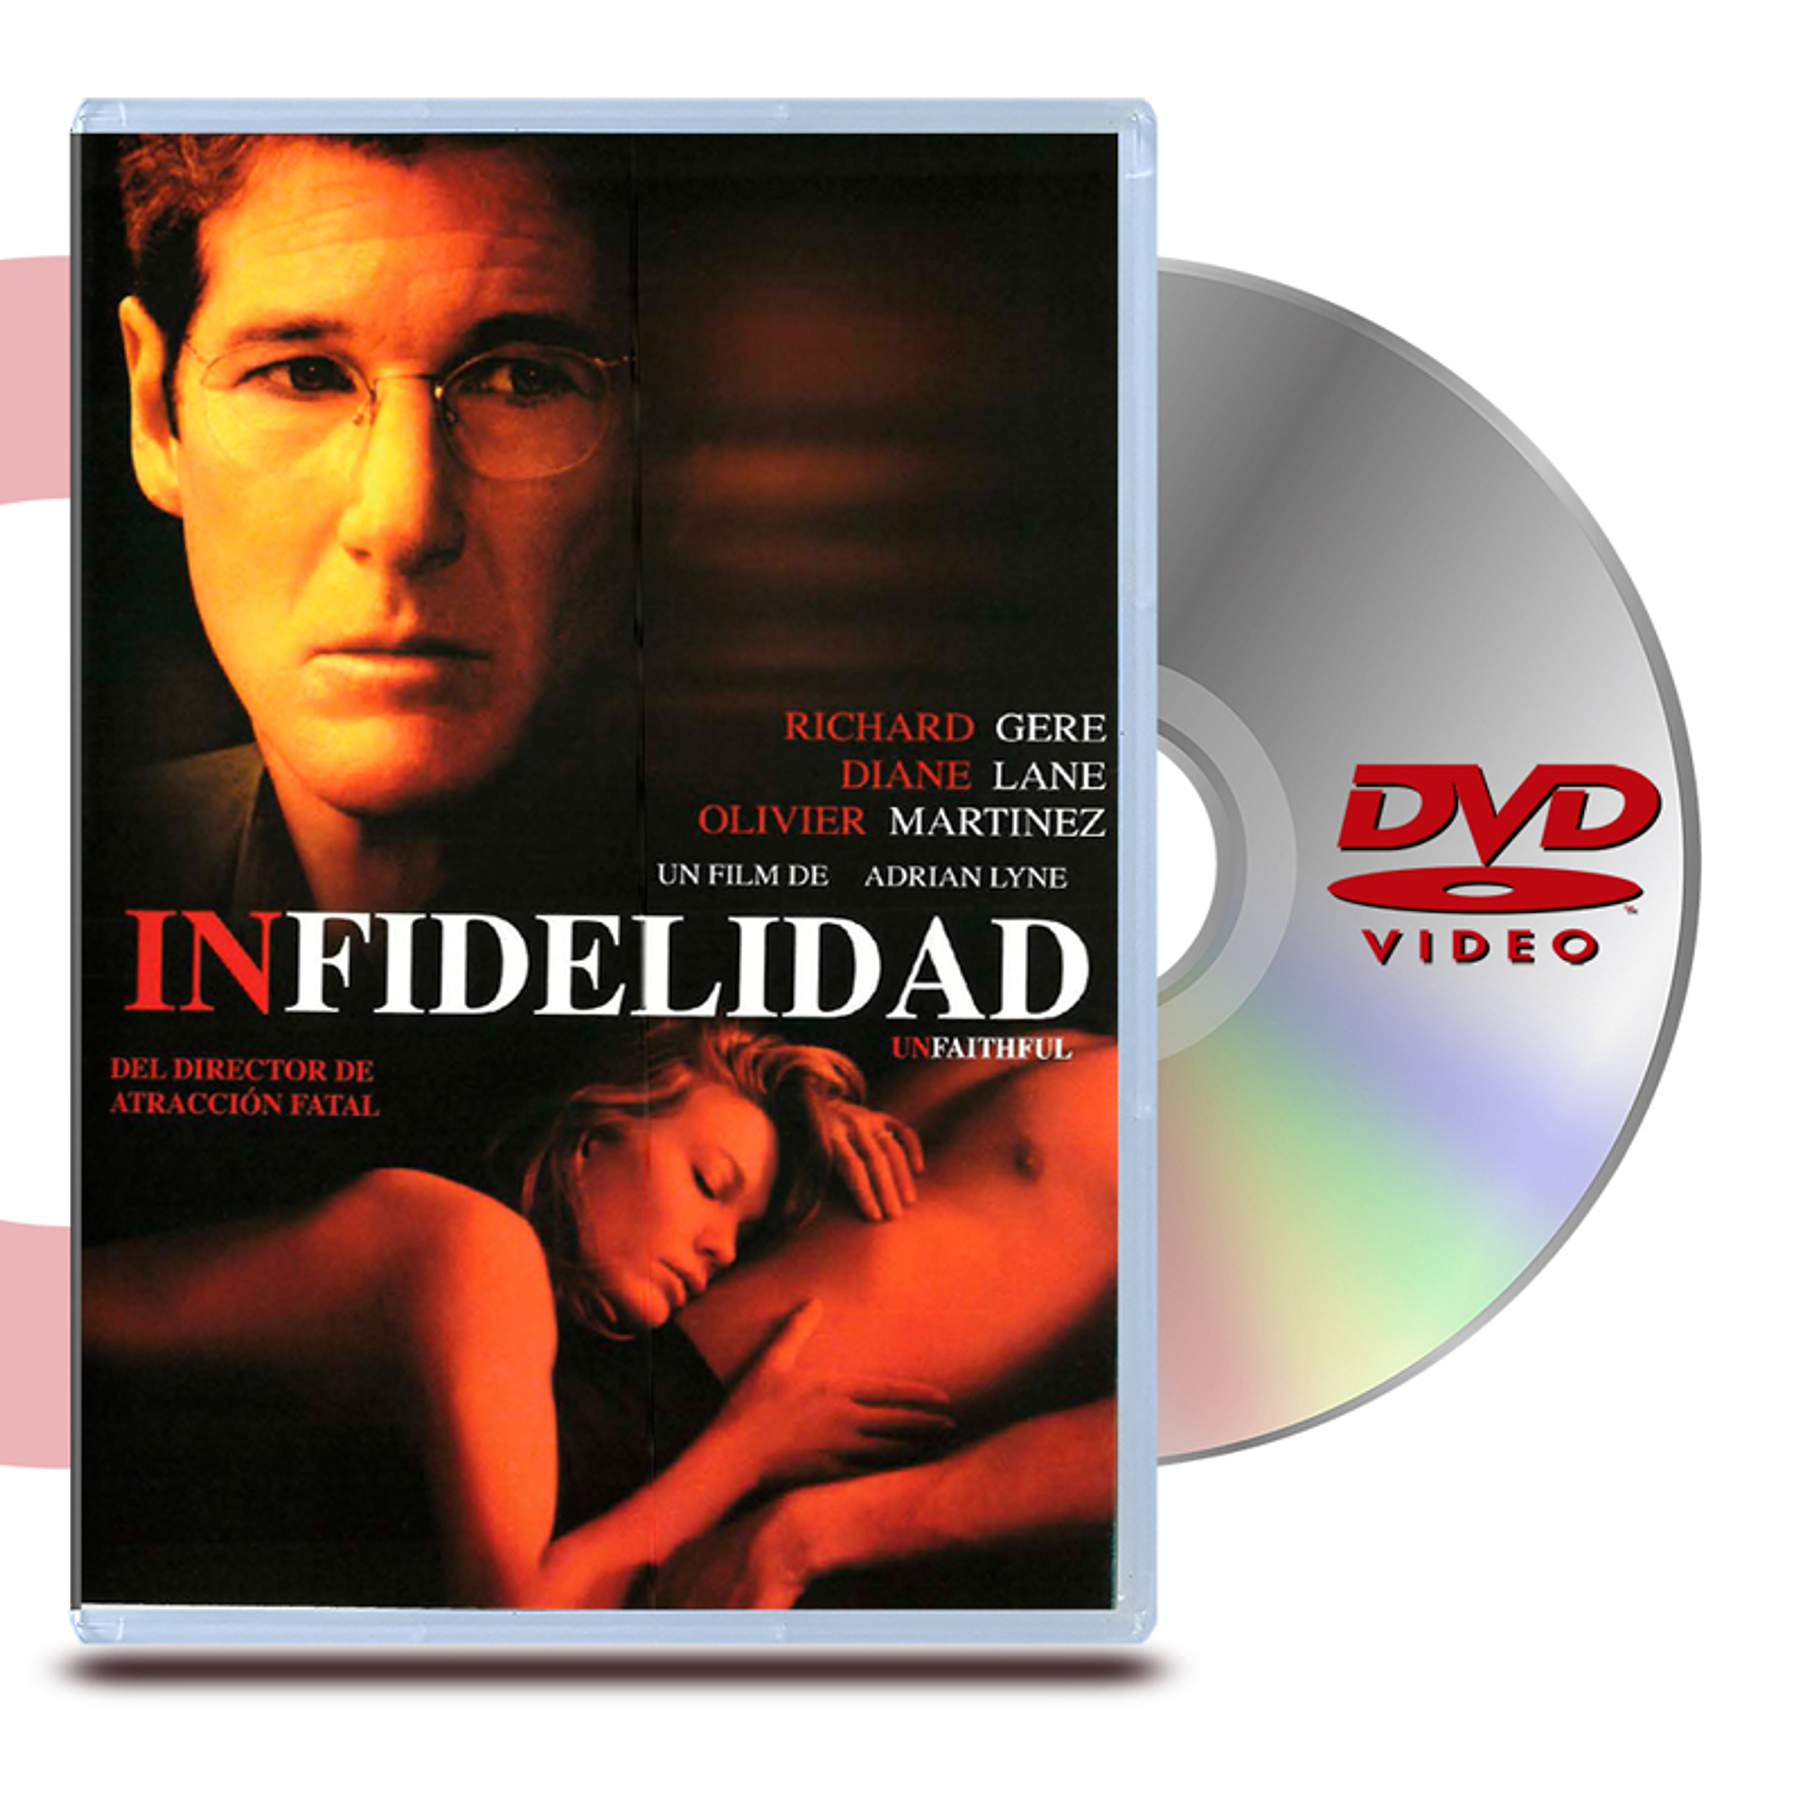 DVD INFIDELIDAD (UNFAITHFUL)